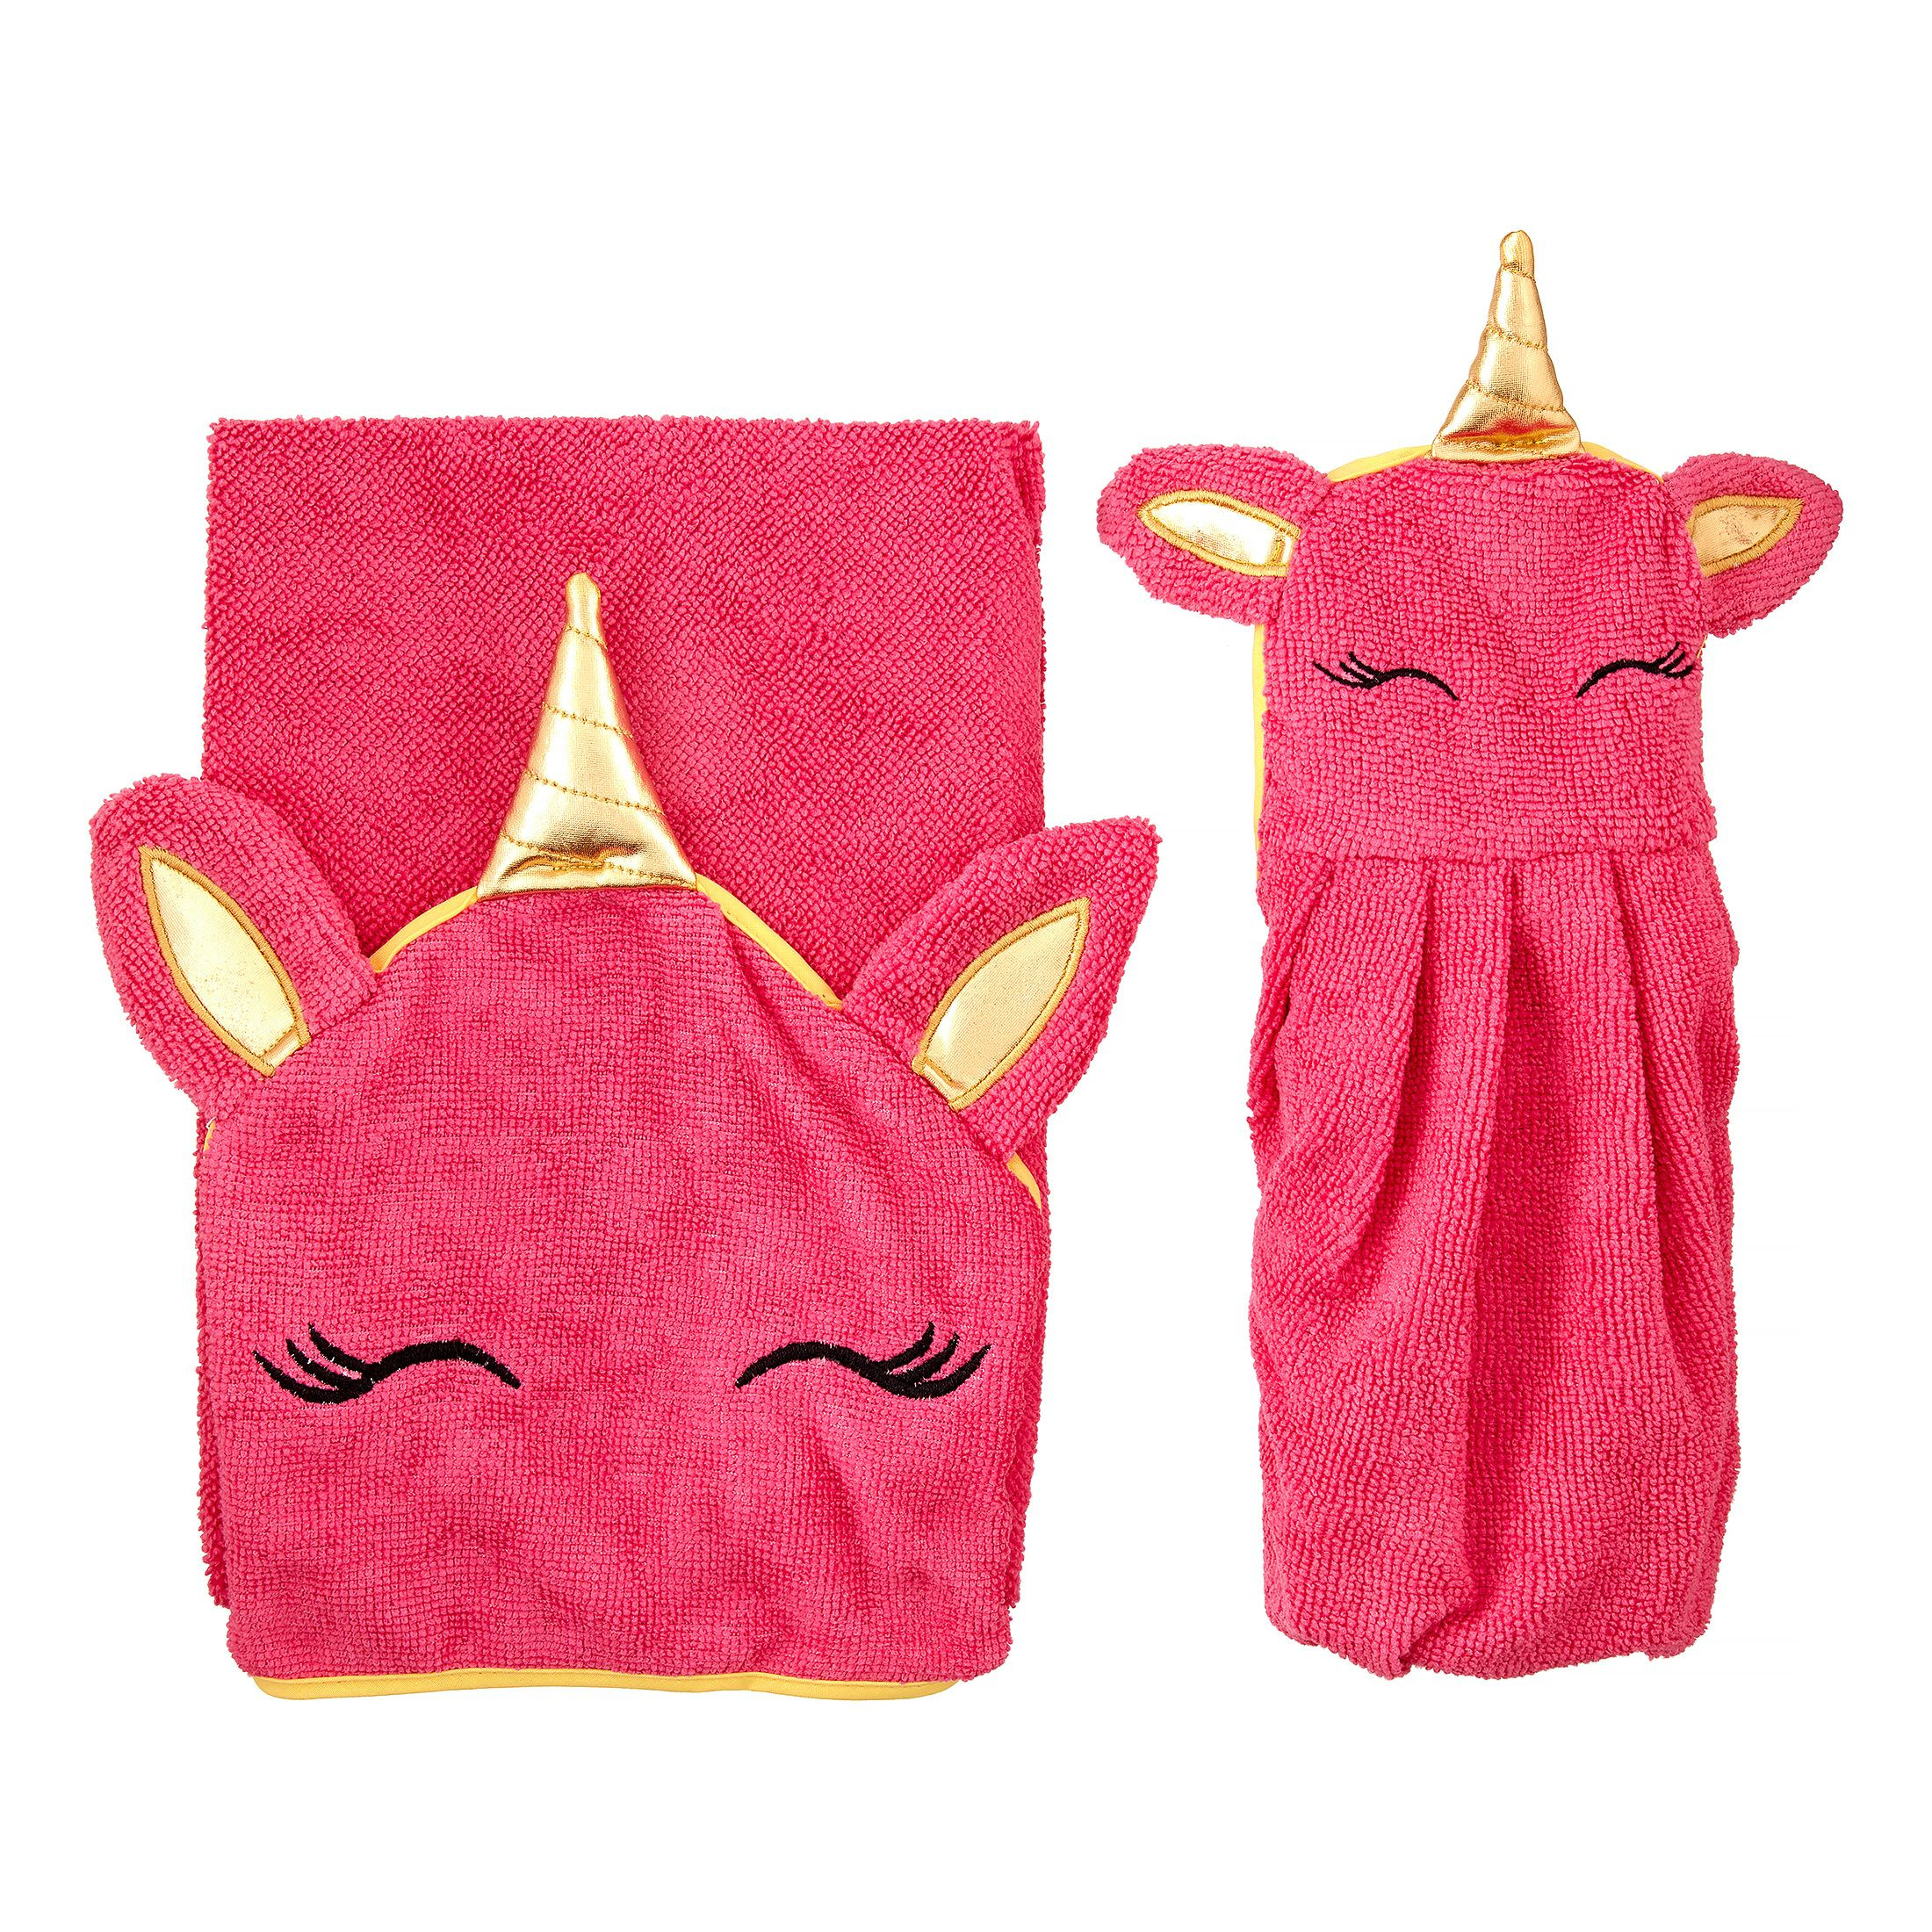 Kids Bathroom Sets Walmart
 Unicorn Hooded Towel and Washcloth Bath Gift Set for Kids